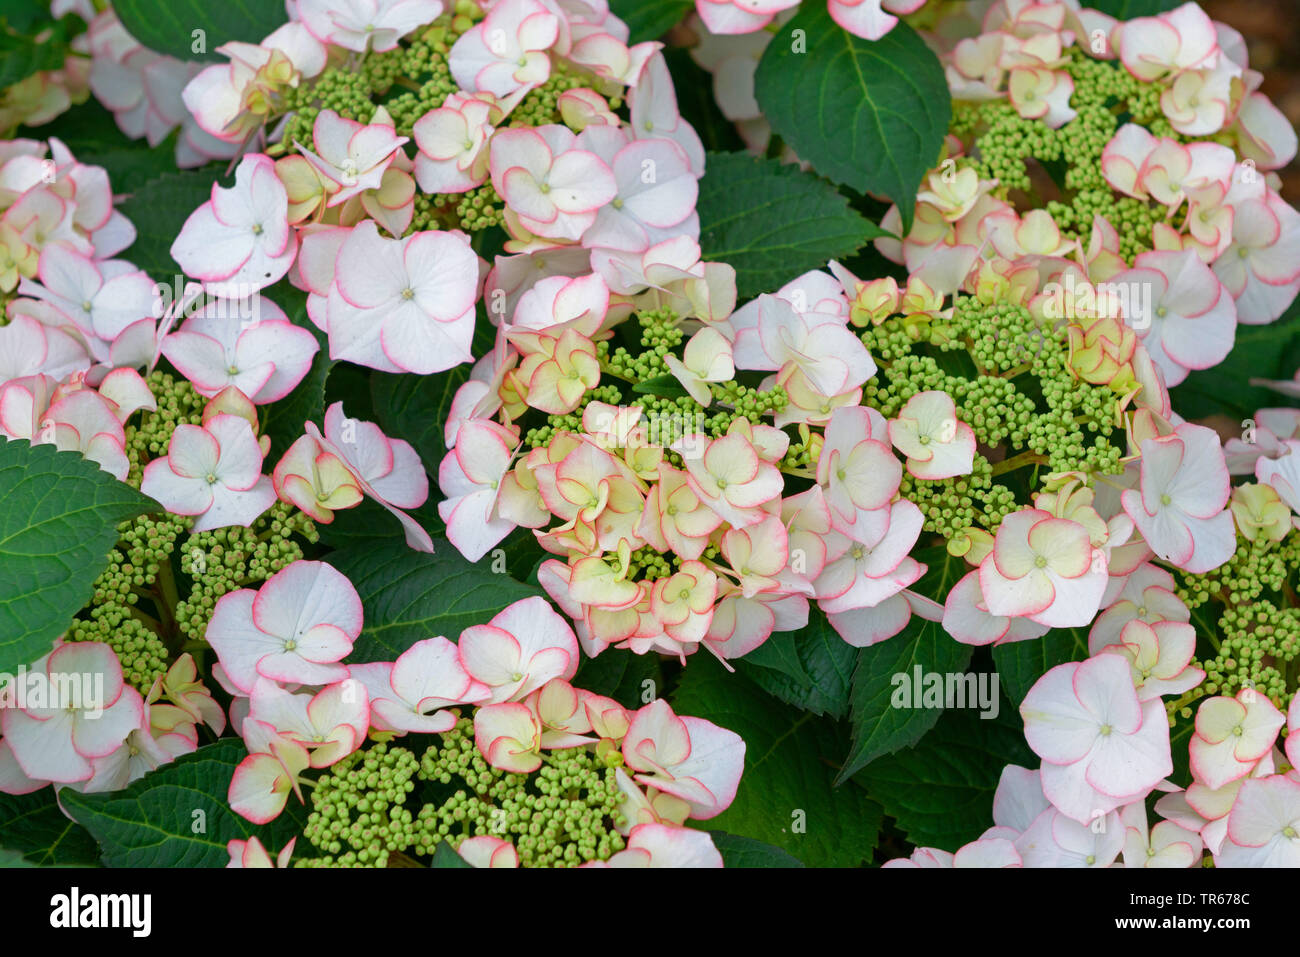 Garden hydrangea, Lace cap hydrangea (Hydrangea macrophylla ''Charm'', Hydrangea macrophylla Charm), blooming, cultivar Charm Stock Photo